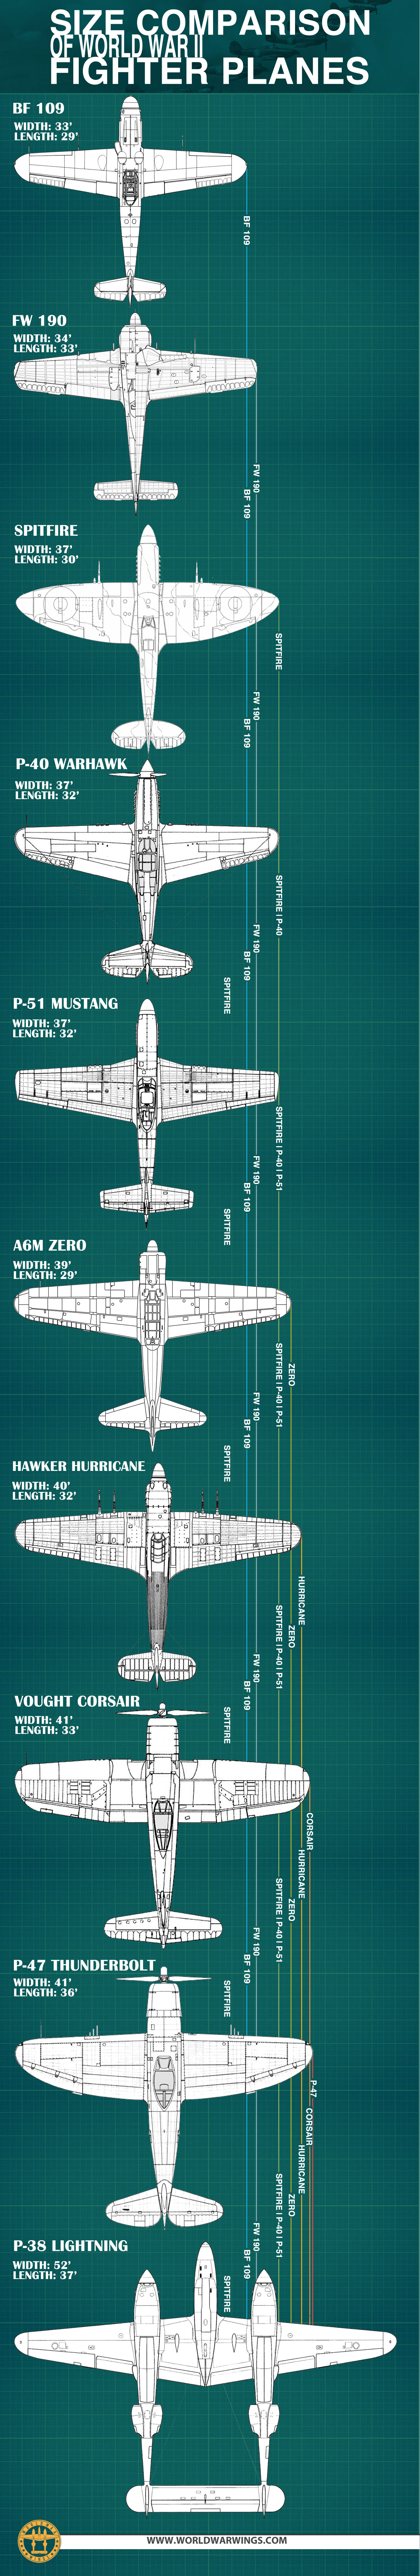 47+ Fighter Planes World War 2 - mindmewsw69t3s.netlify.app